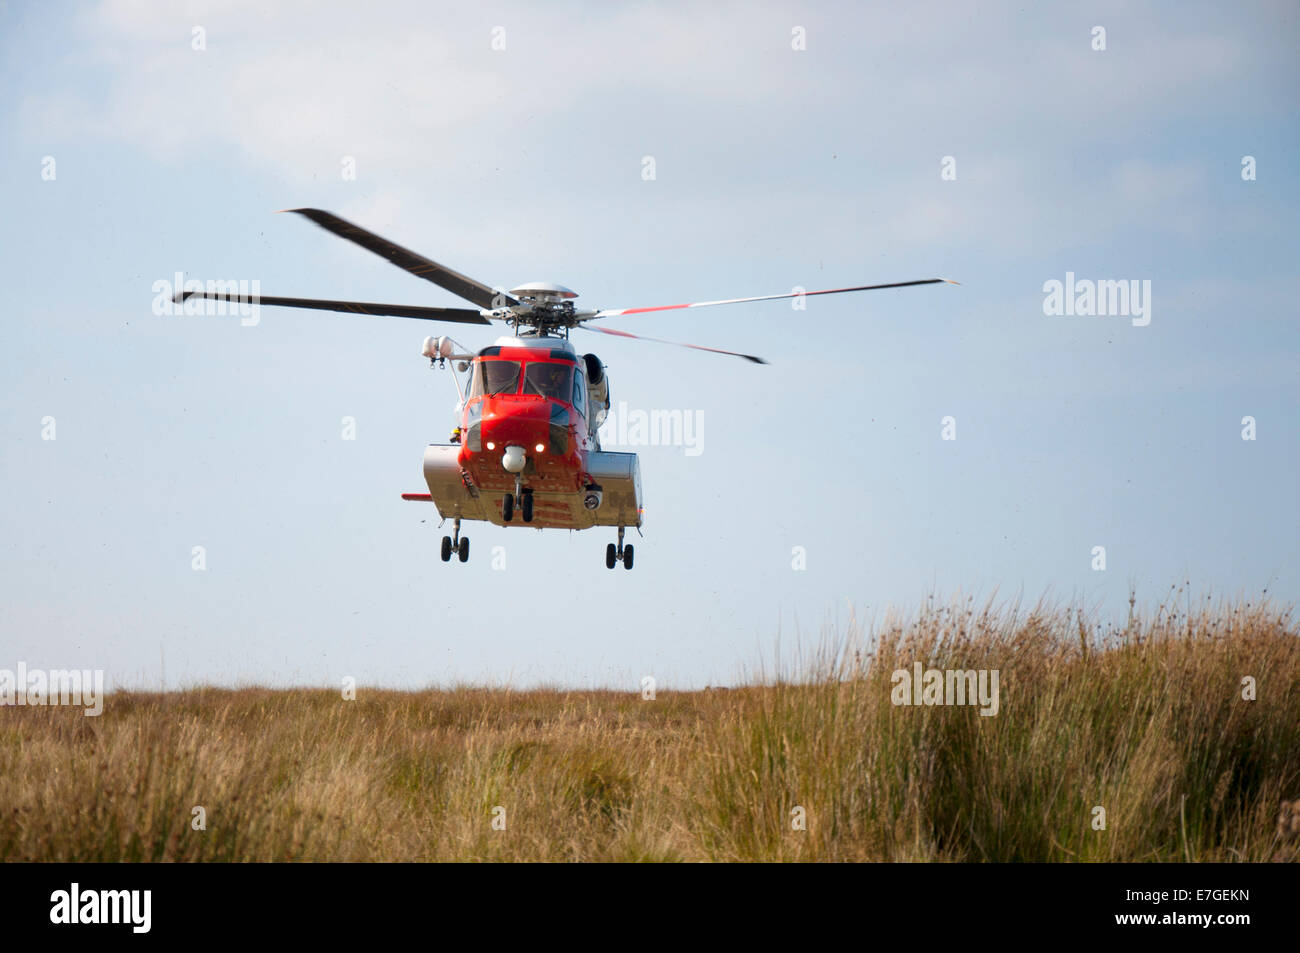 Irish Coast Guard IRCG Garda Cósta na hÉireann Sikorsky elicottero vola sopra durante un soccorso medico in Irlanda rurale Foto Stock